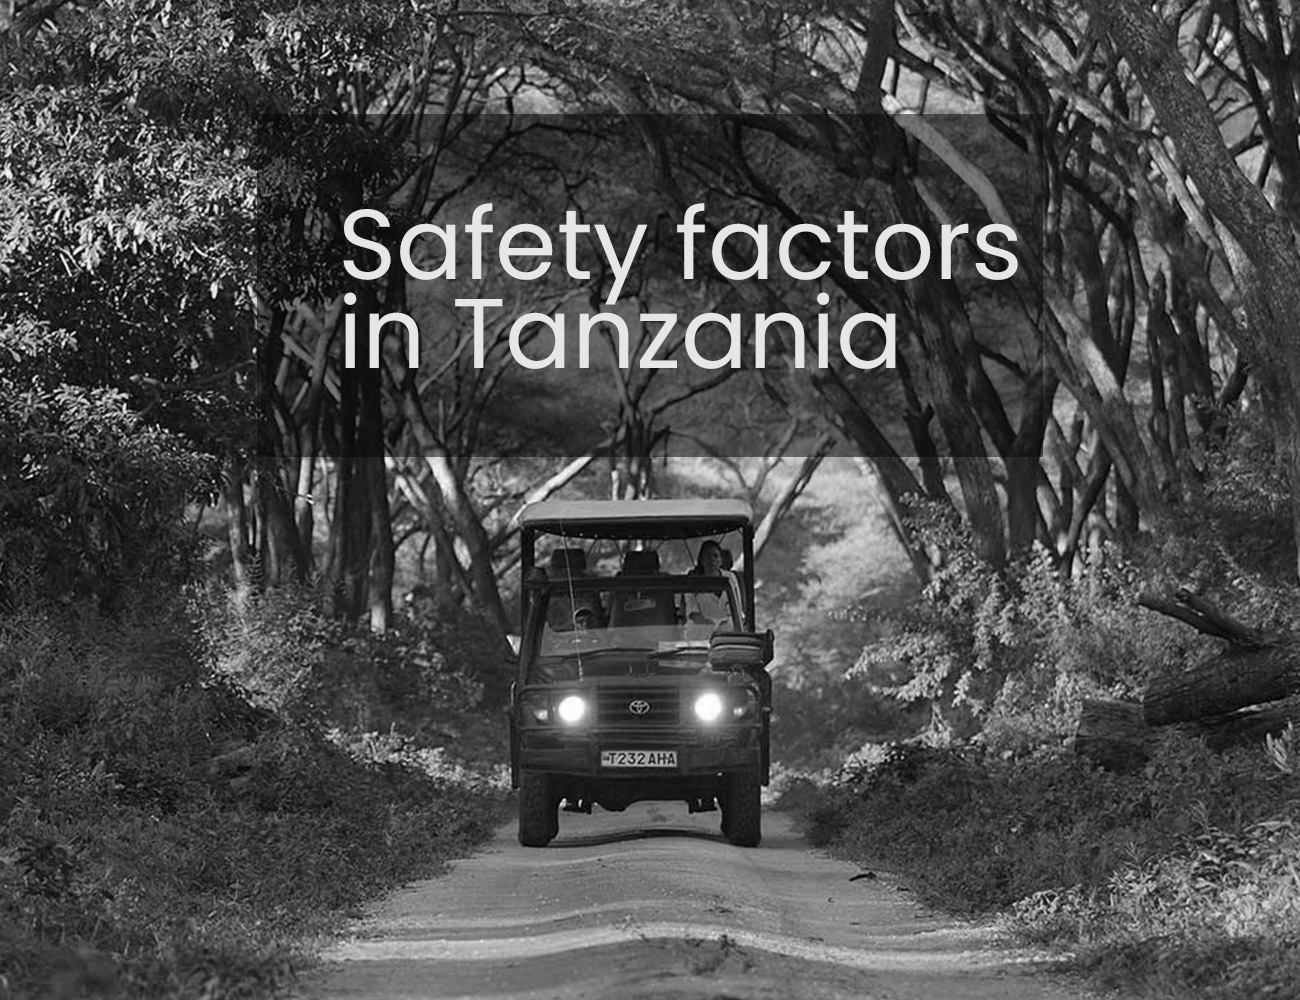 Jeep Moving Through a Tanzanian Safari